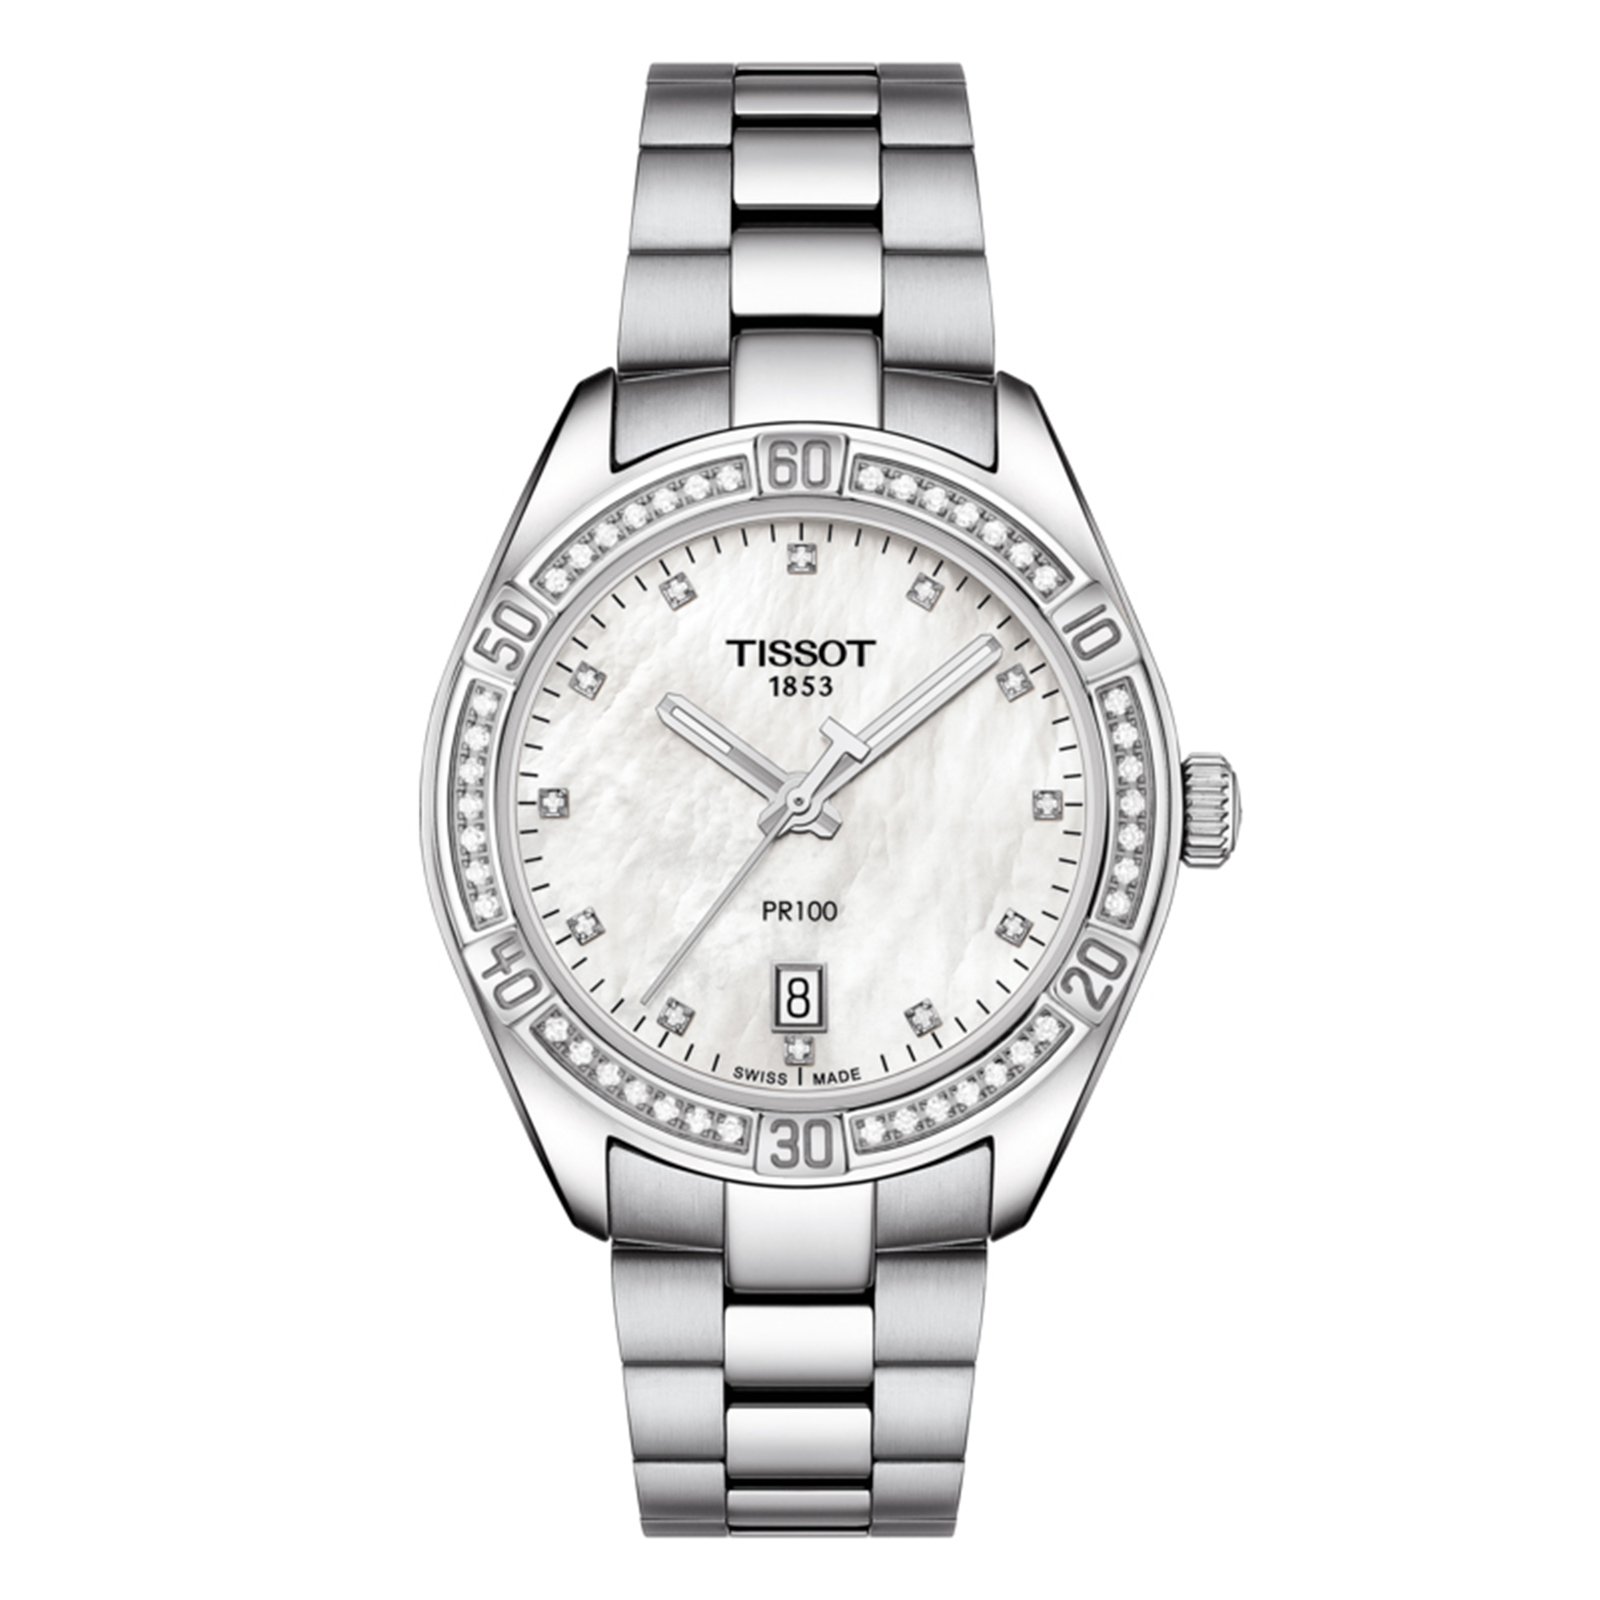 Tissot T-Classic 36mm Watch T1019106111600 Reviews